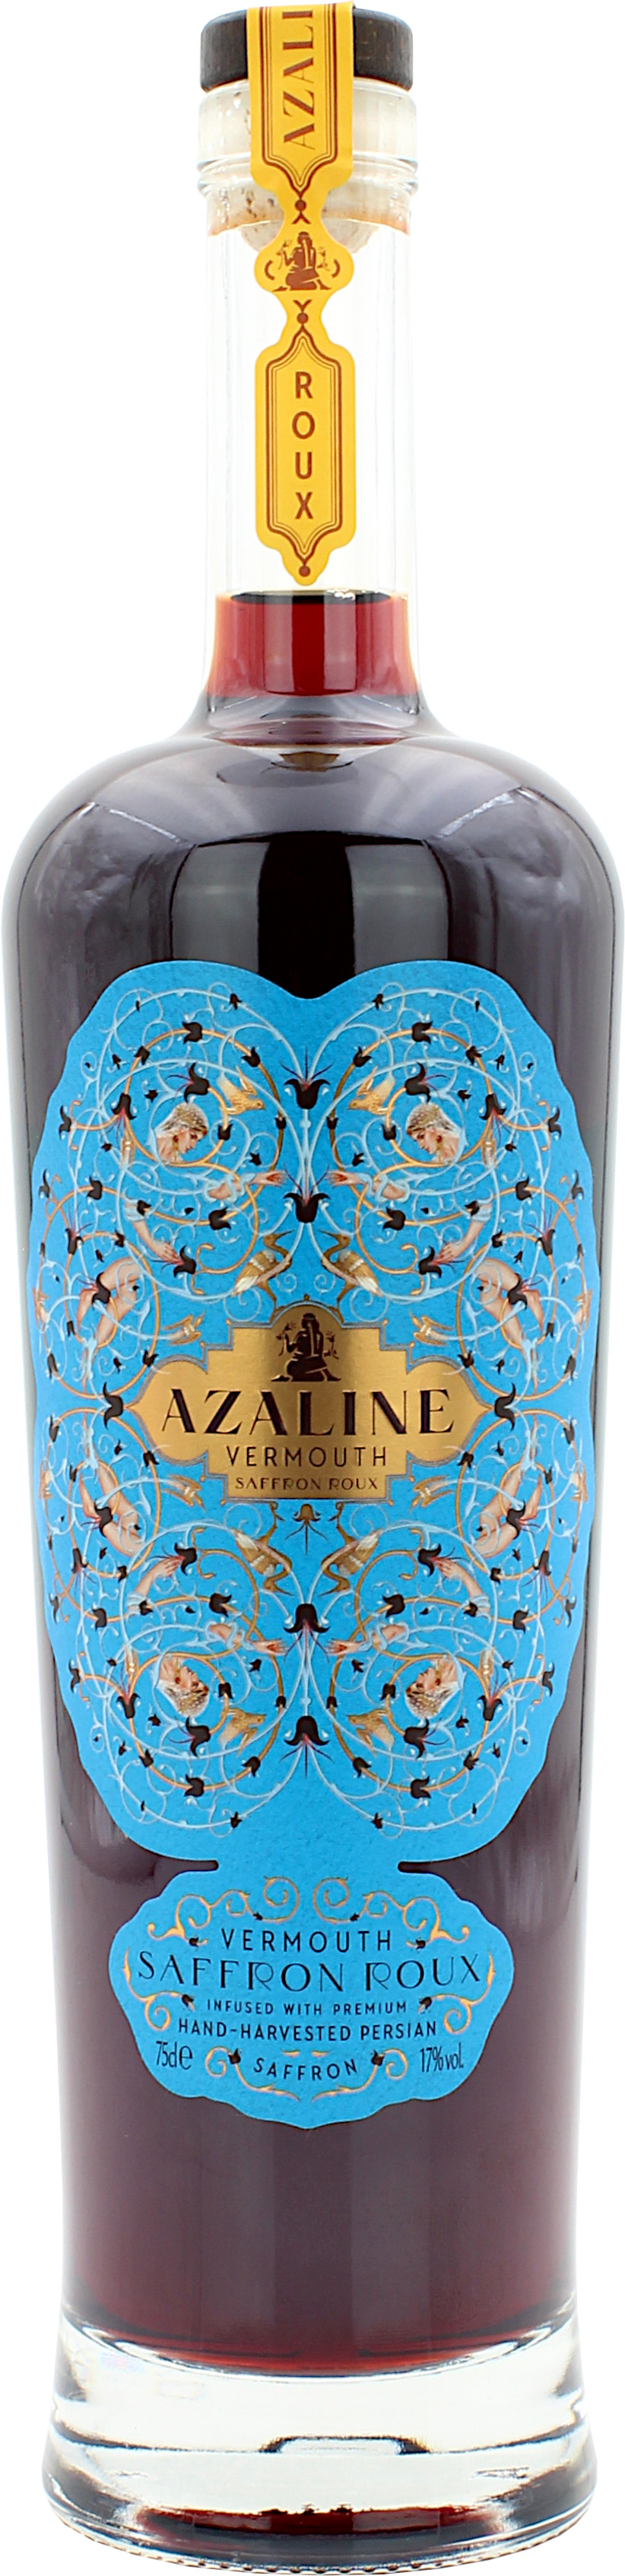 Azaline Vermouth Saffron Roux 17.0% 0,75l